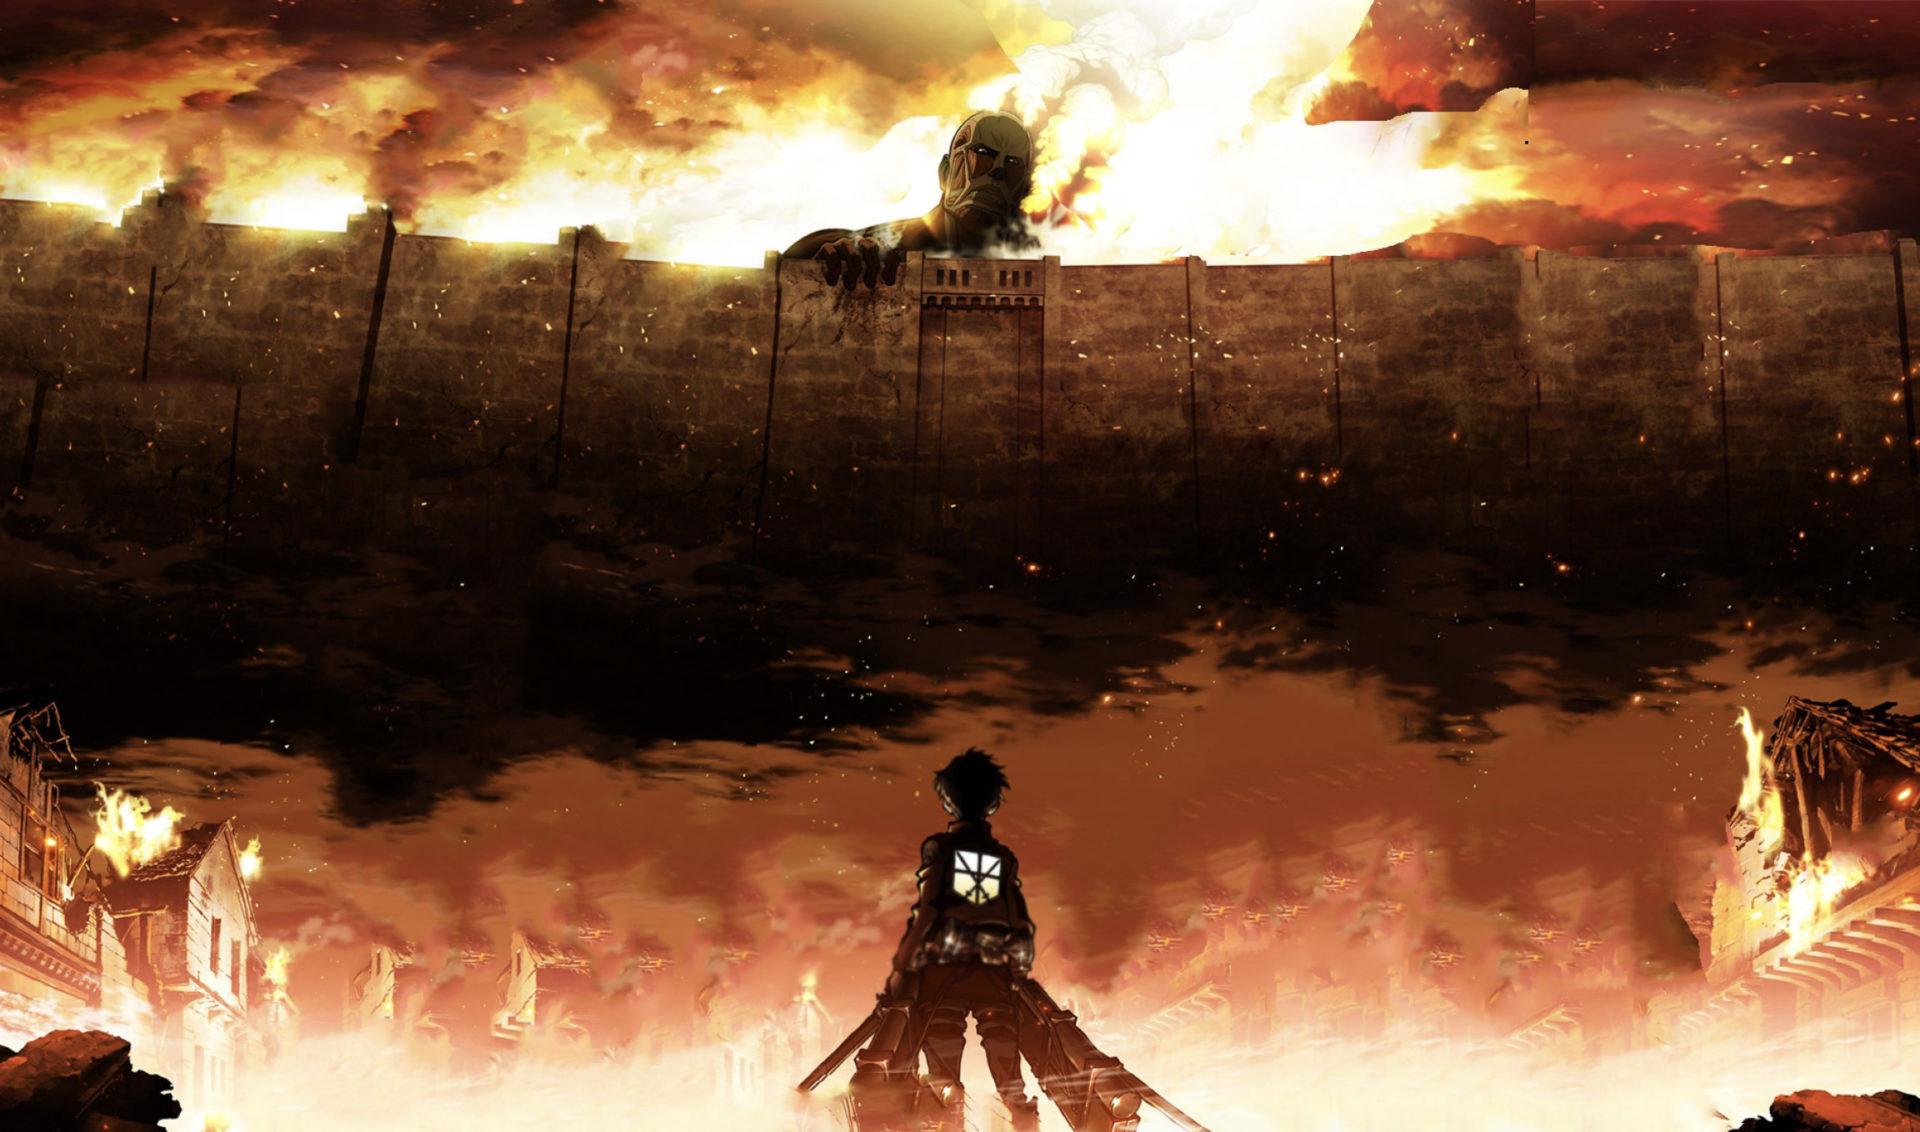 Promotional image of Attack on Titan Season 1 featuring Eren Jaegar.